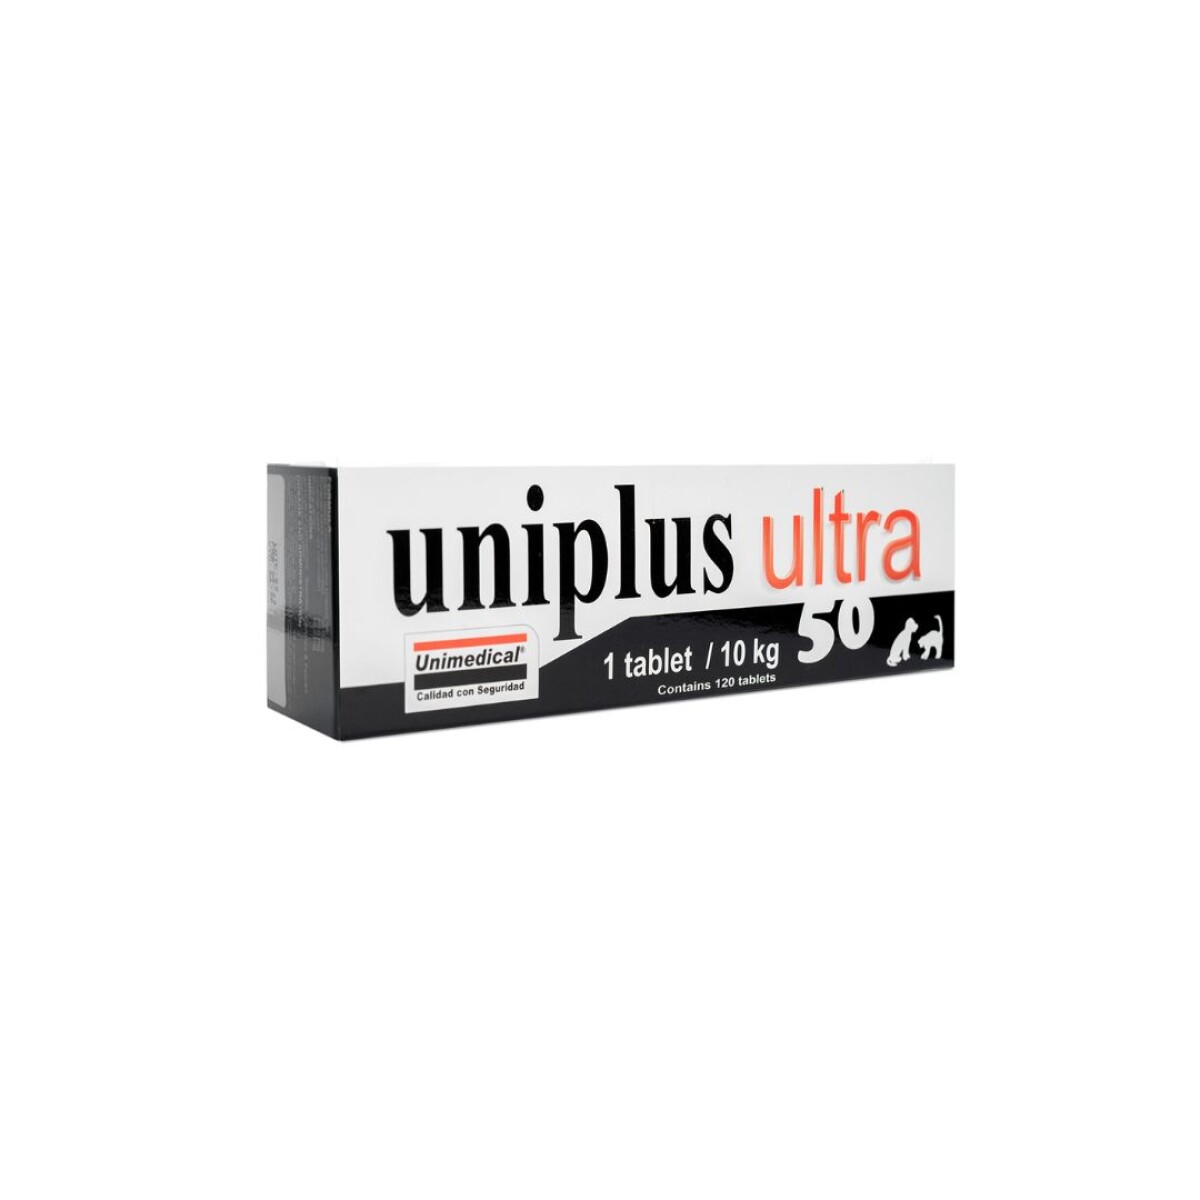 UNIPLUS ULTRA UNIDAD - Unica 